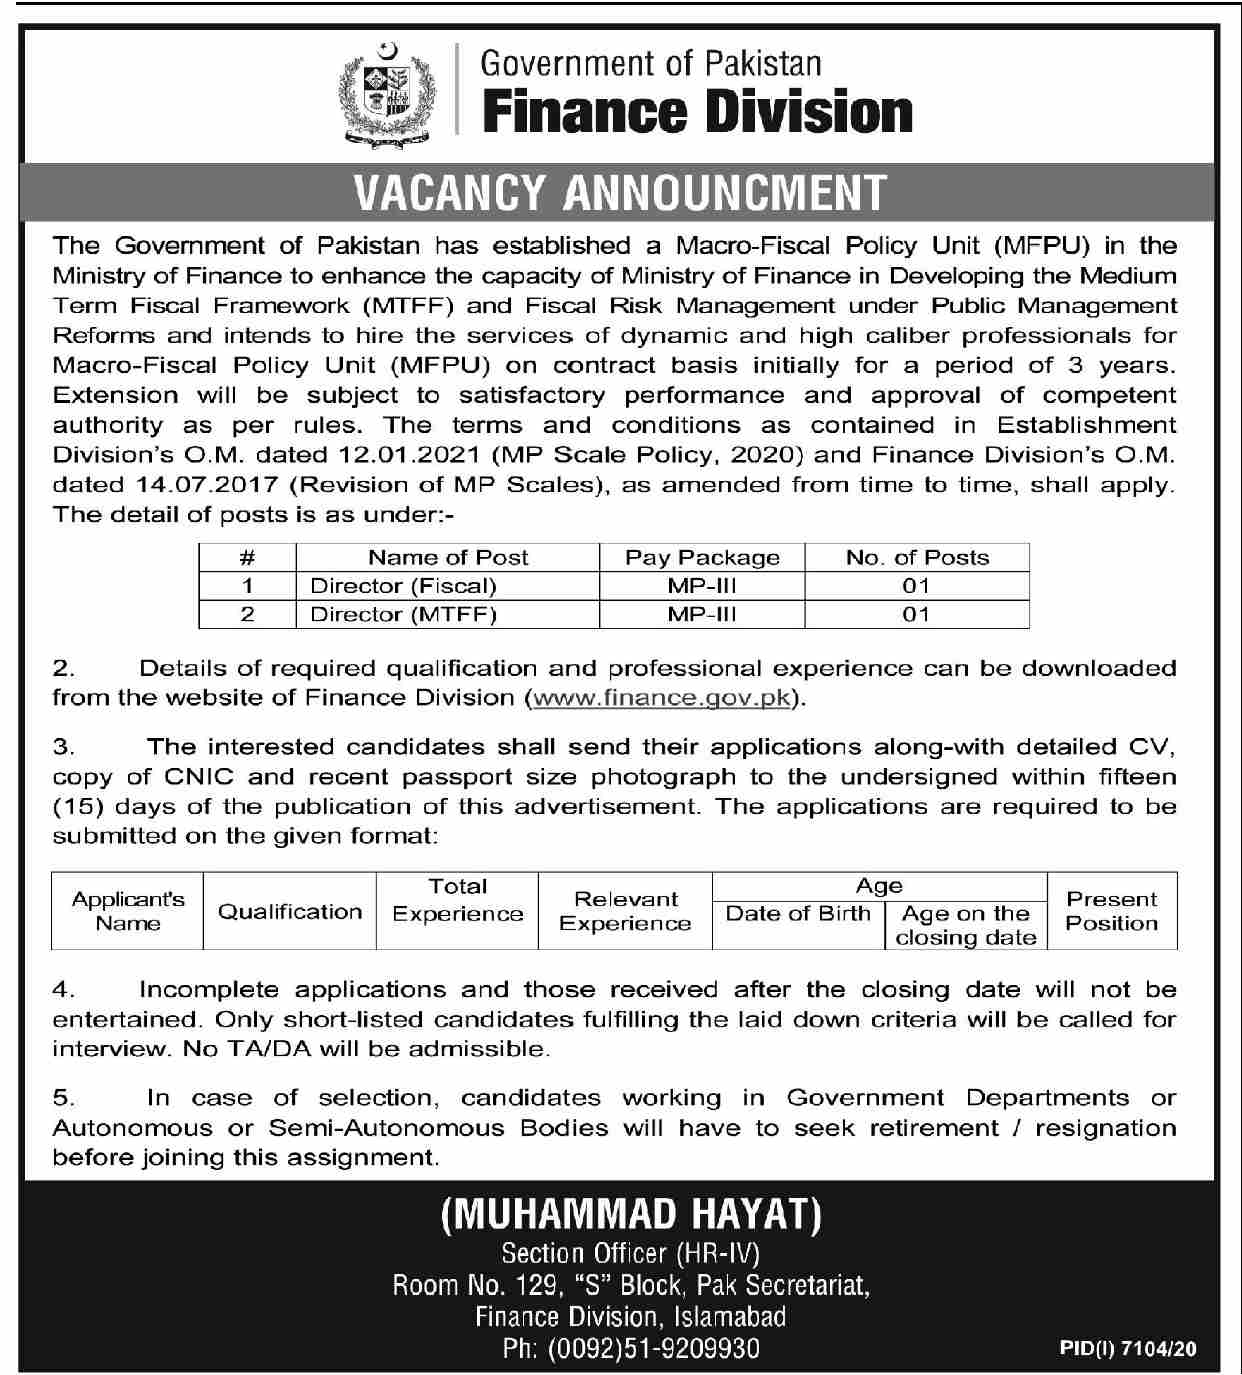 www.finance.gov.pk Jobs 2021 - Government of Pakistan Finance Division Jobs 2021 in Pakistan